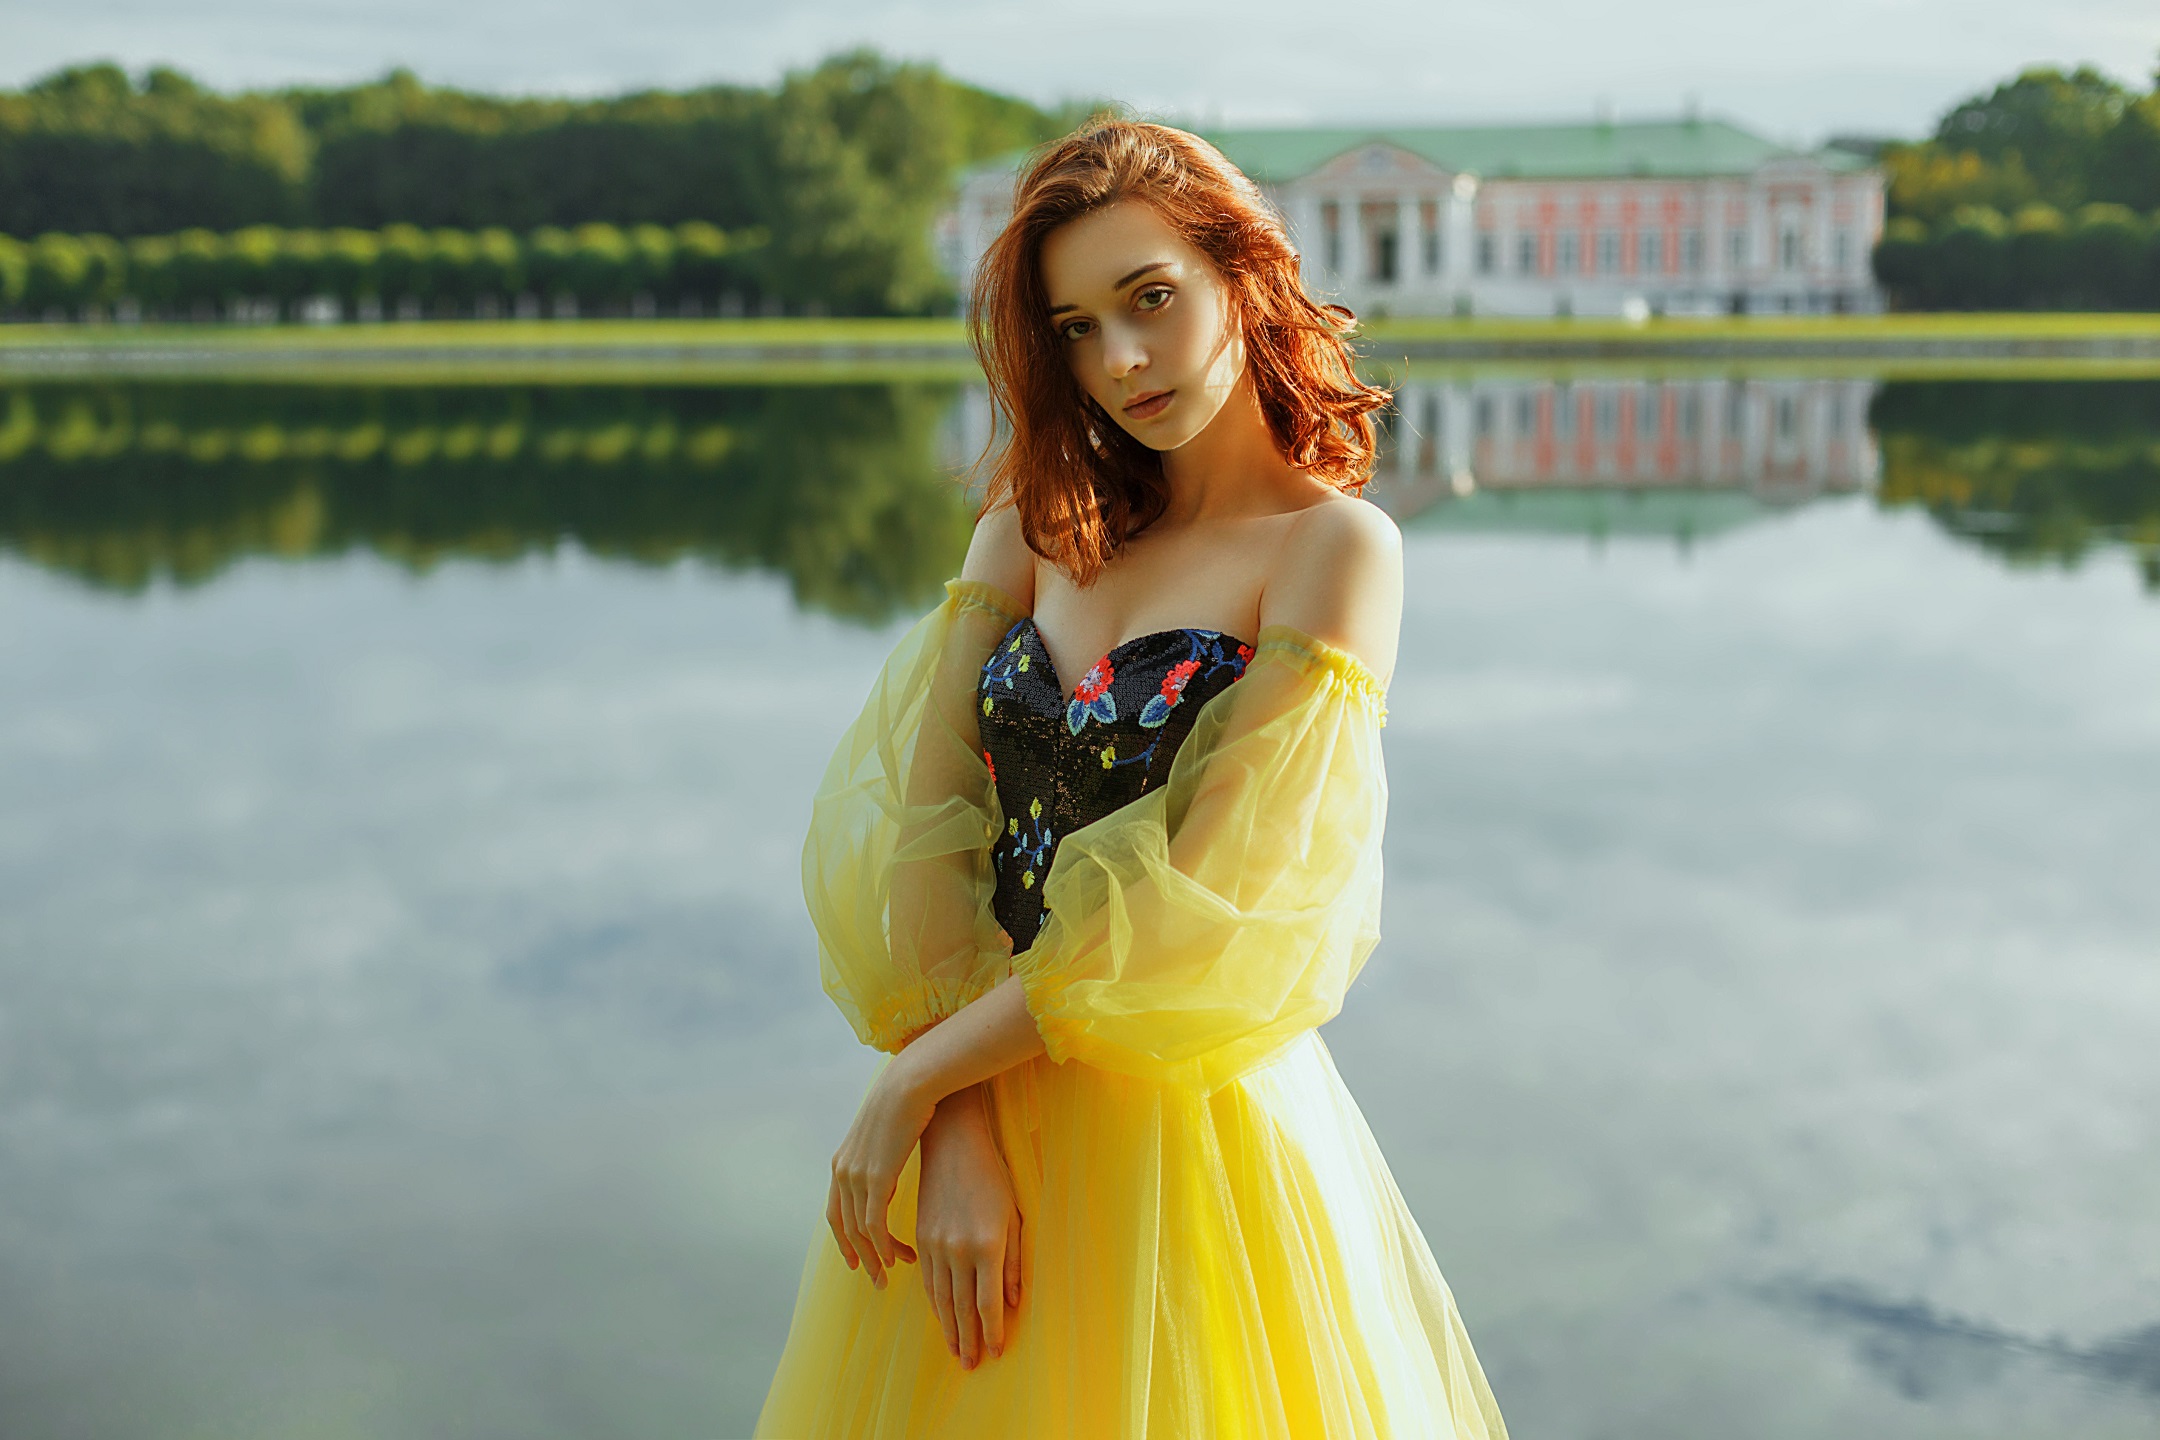 Marie Dashkova Women Redhead Shoulder Length Hair Looking At Viewer Dress Bare Shoulders Lake Outdoo 2160x1440